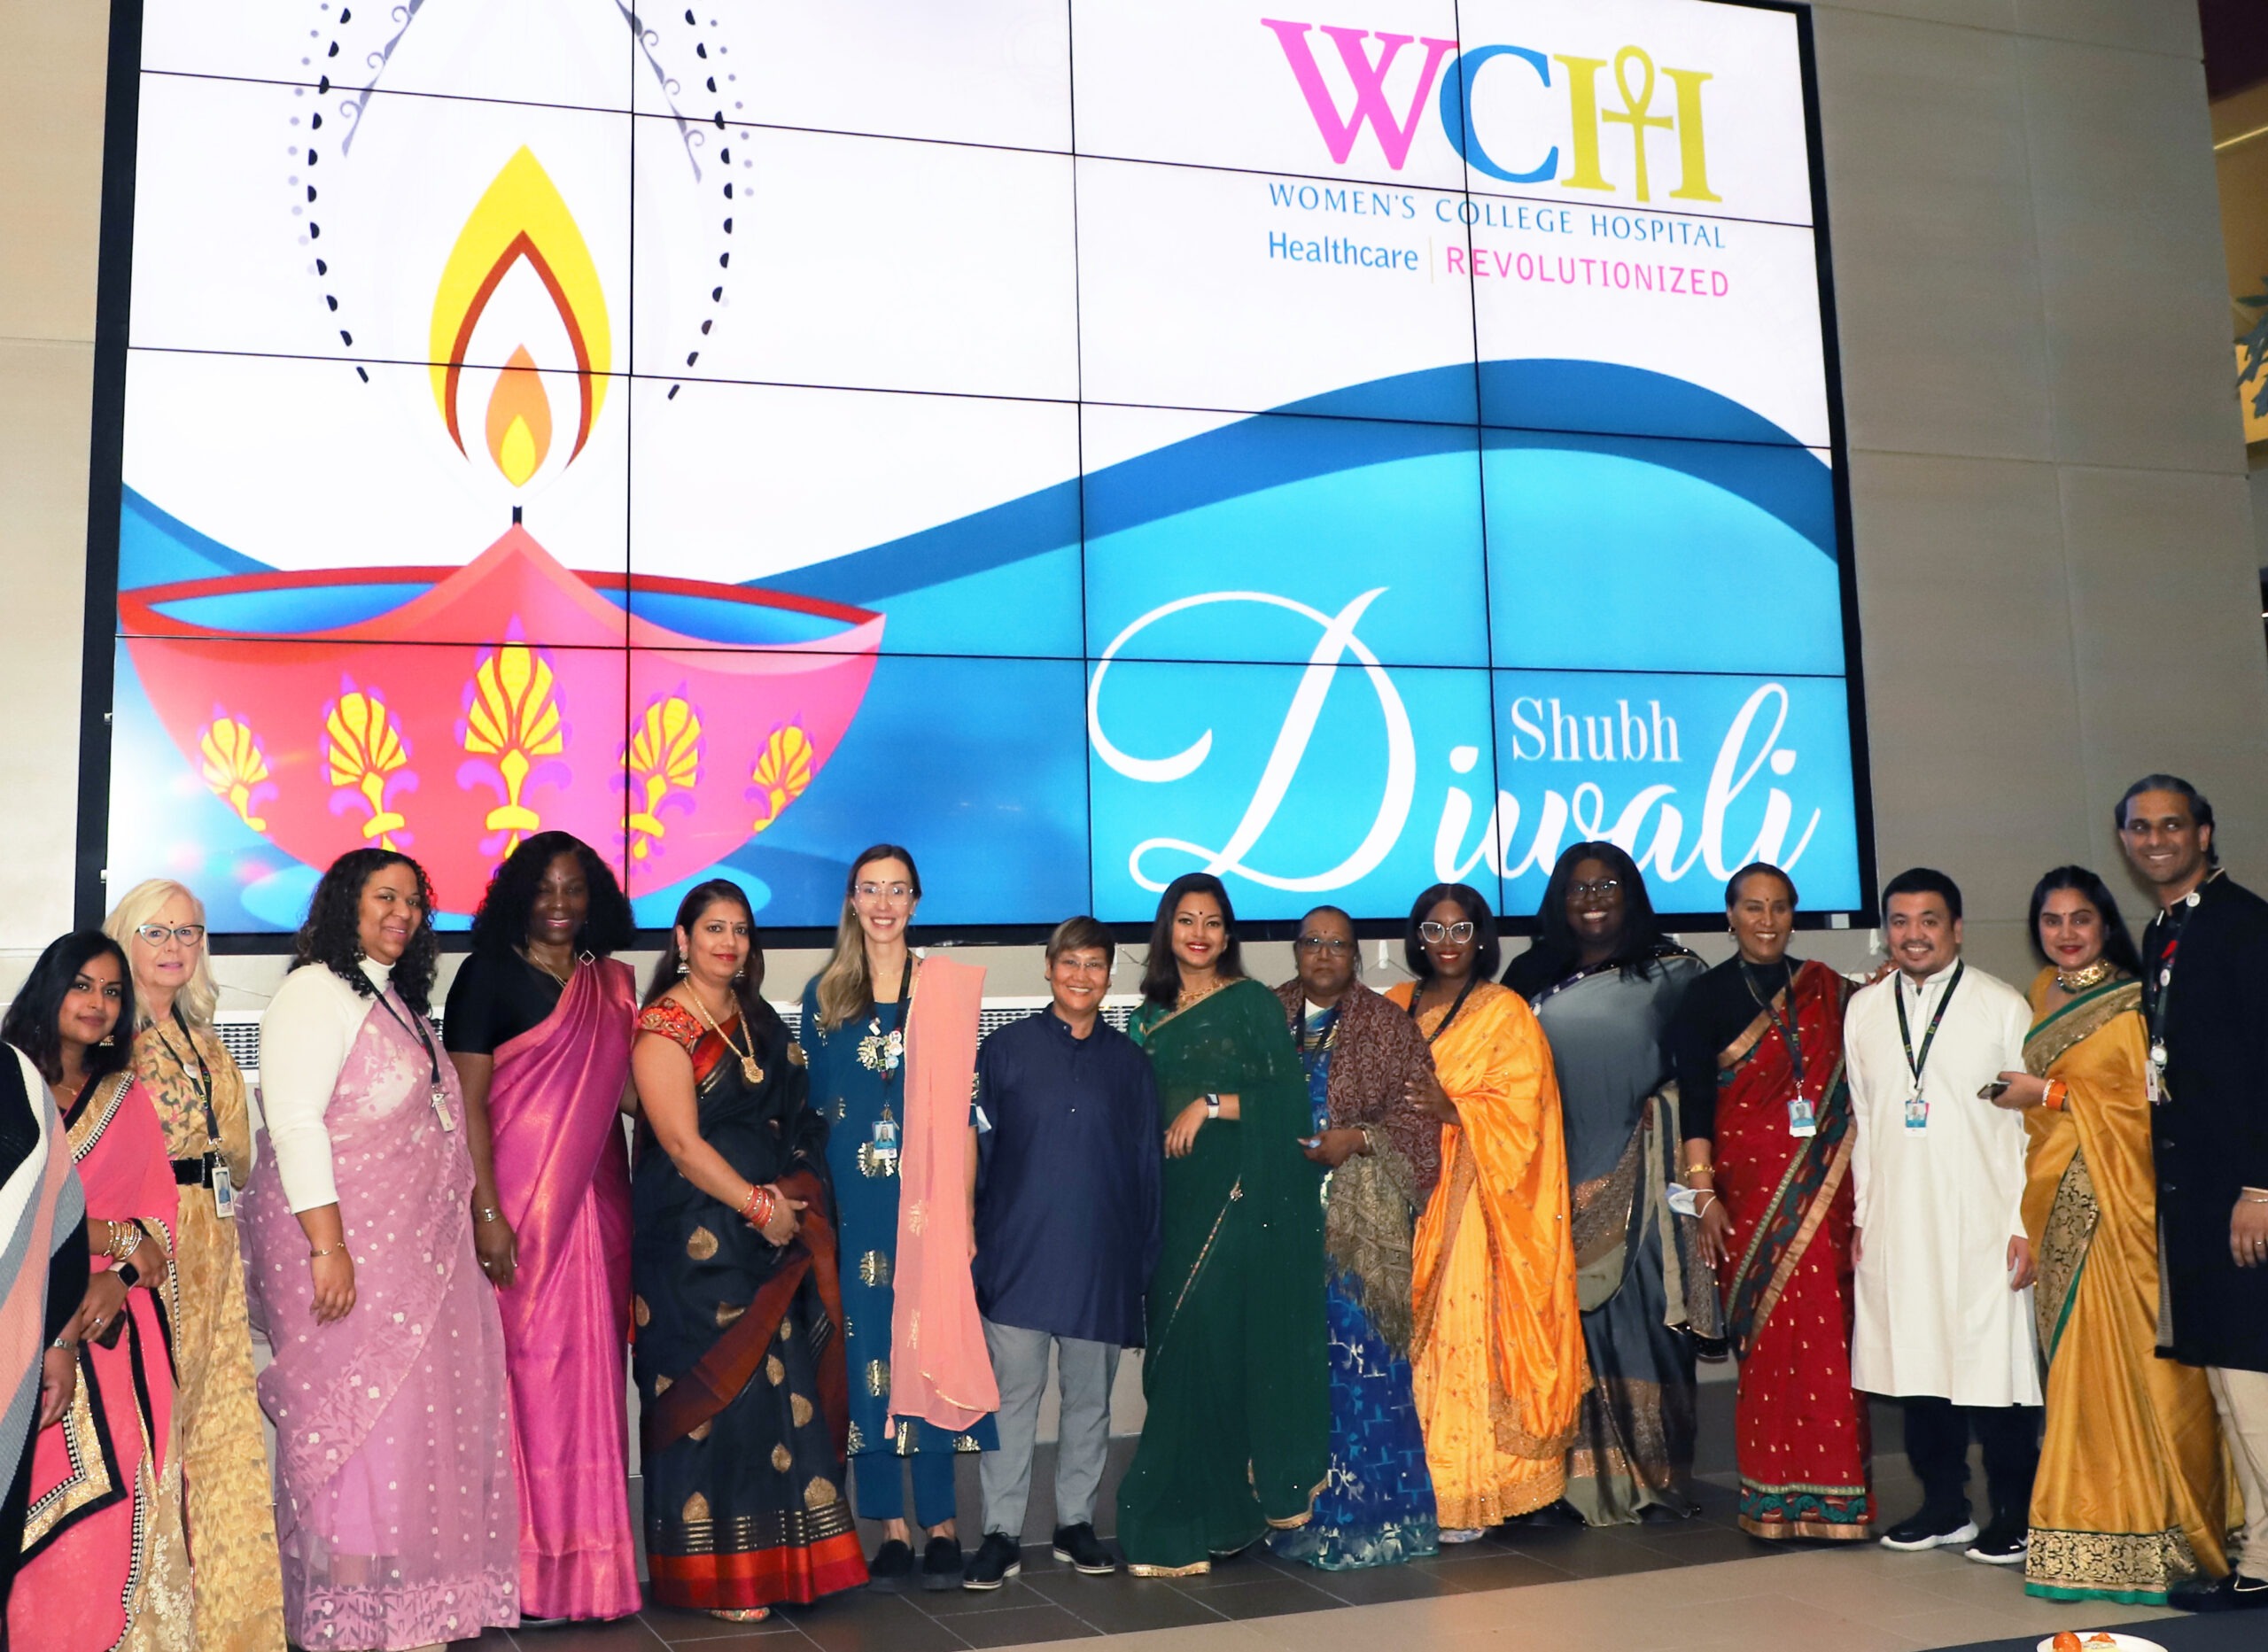 WCH staff dressed in saris celebrating Diwali standing alongside each other smiling 